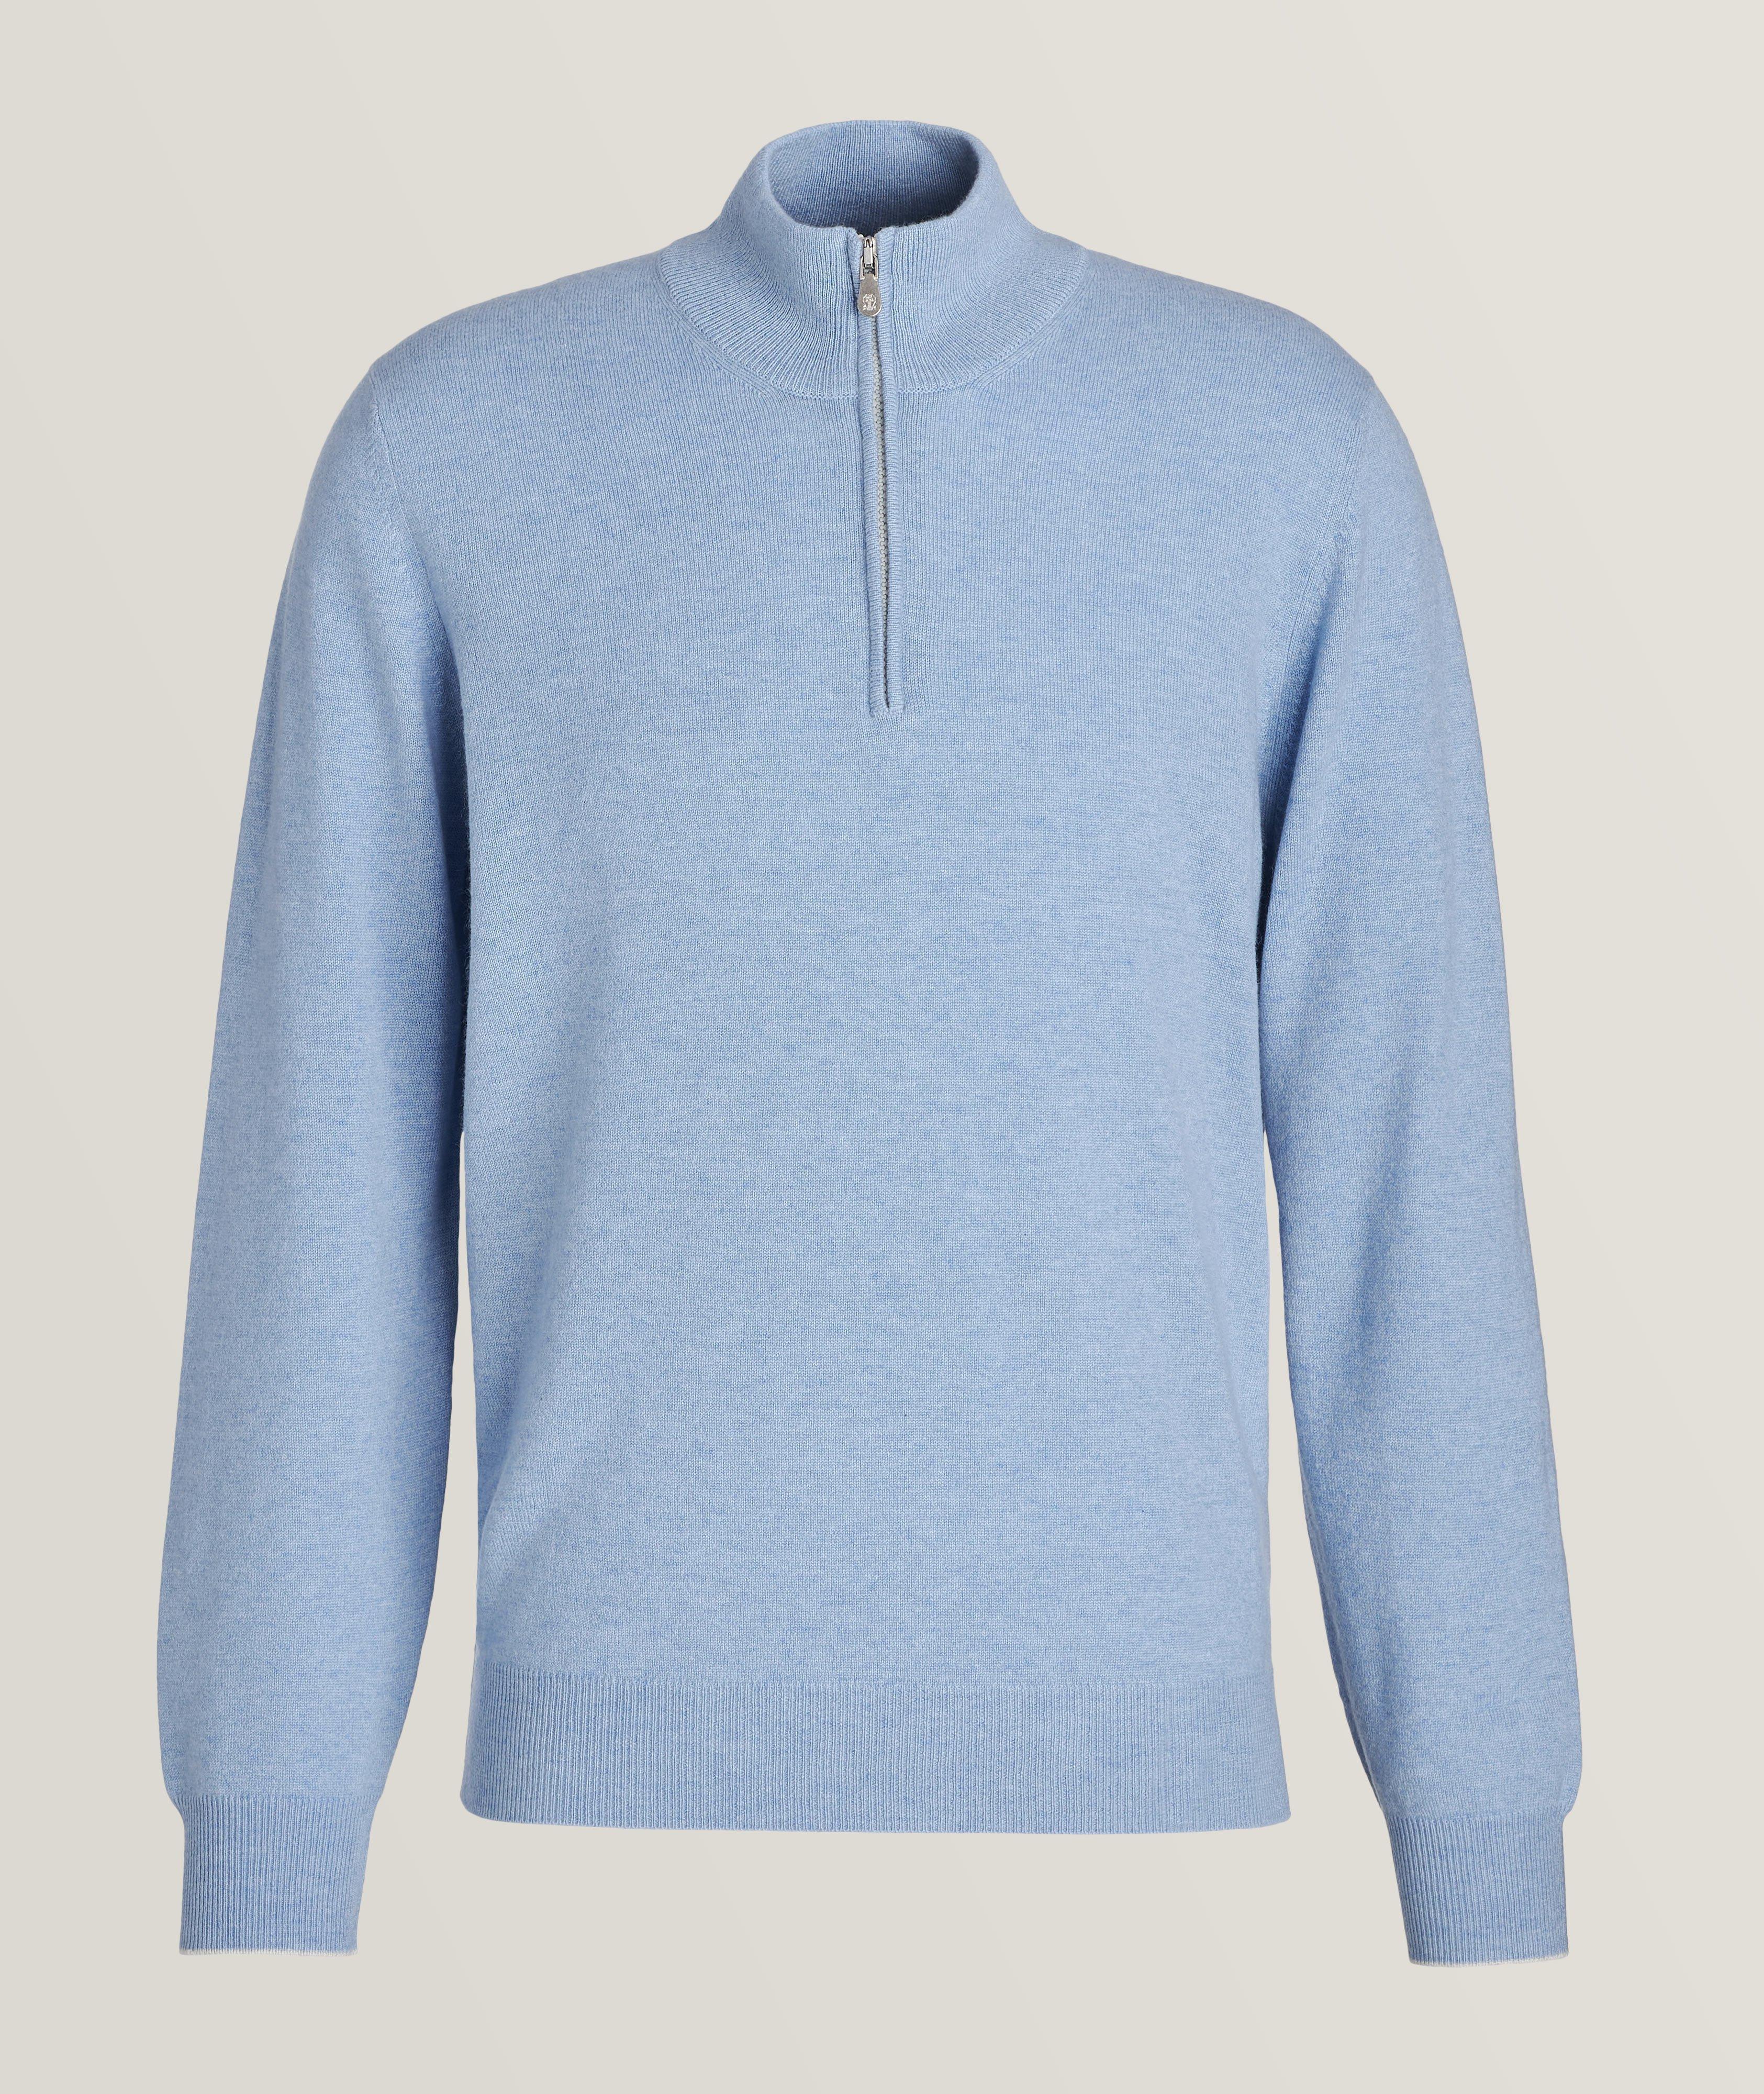 Cashmere Quarter-Zip Mock Neck Sweater image 0